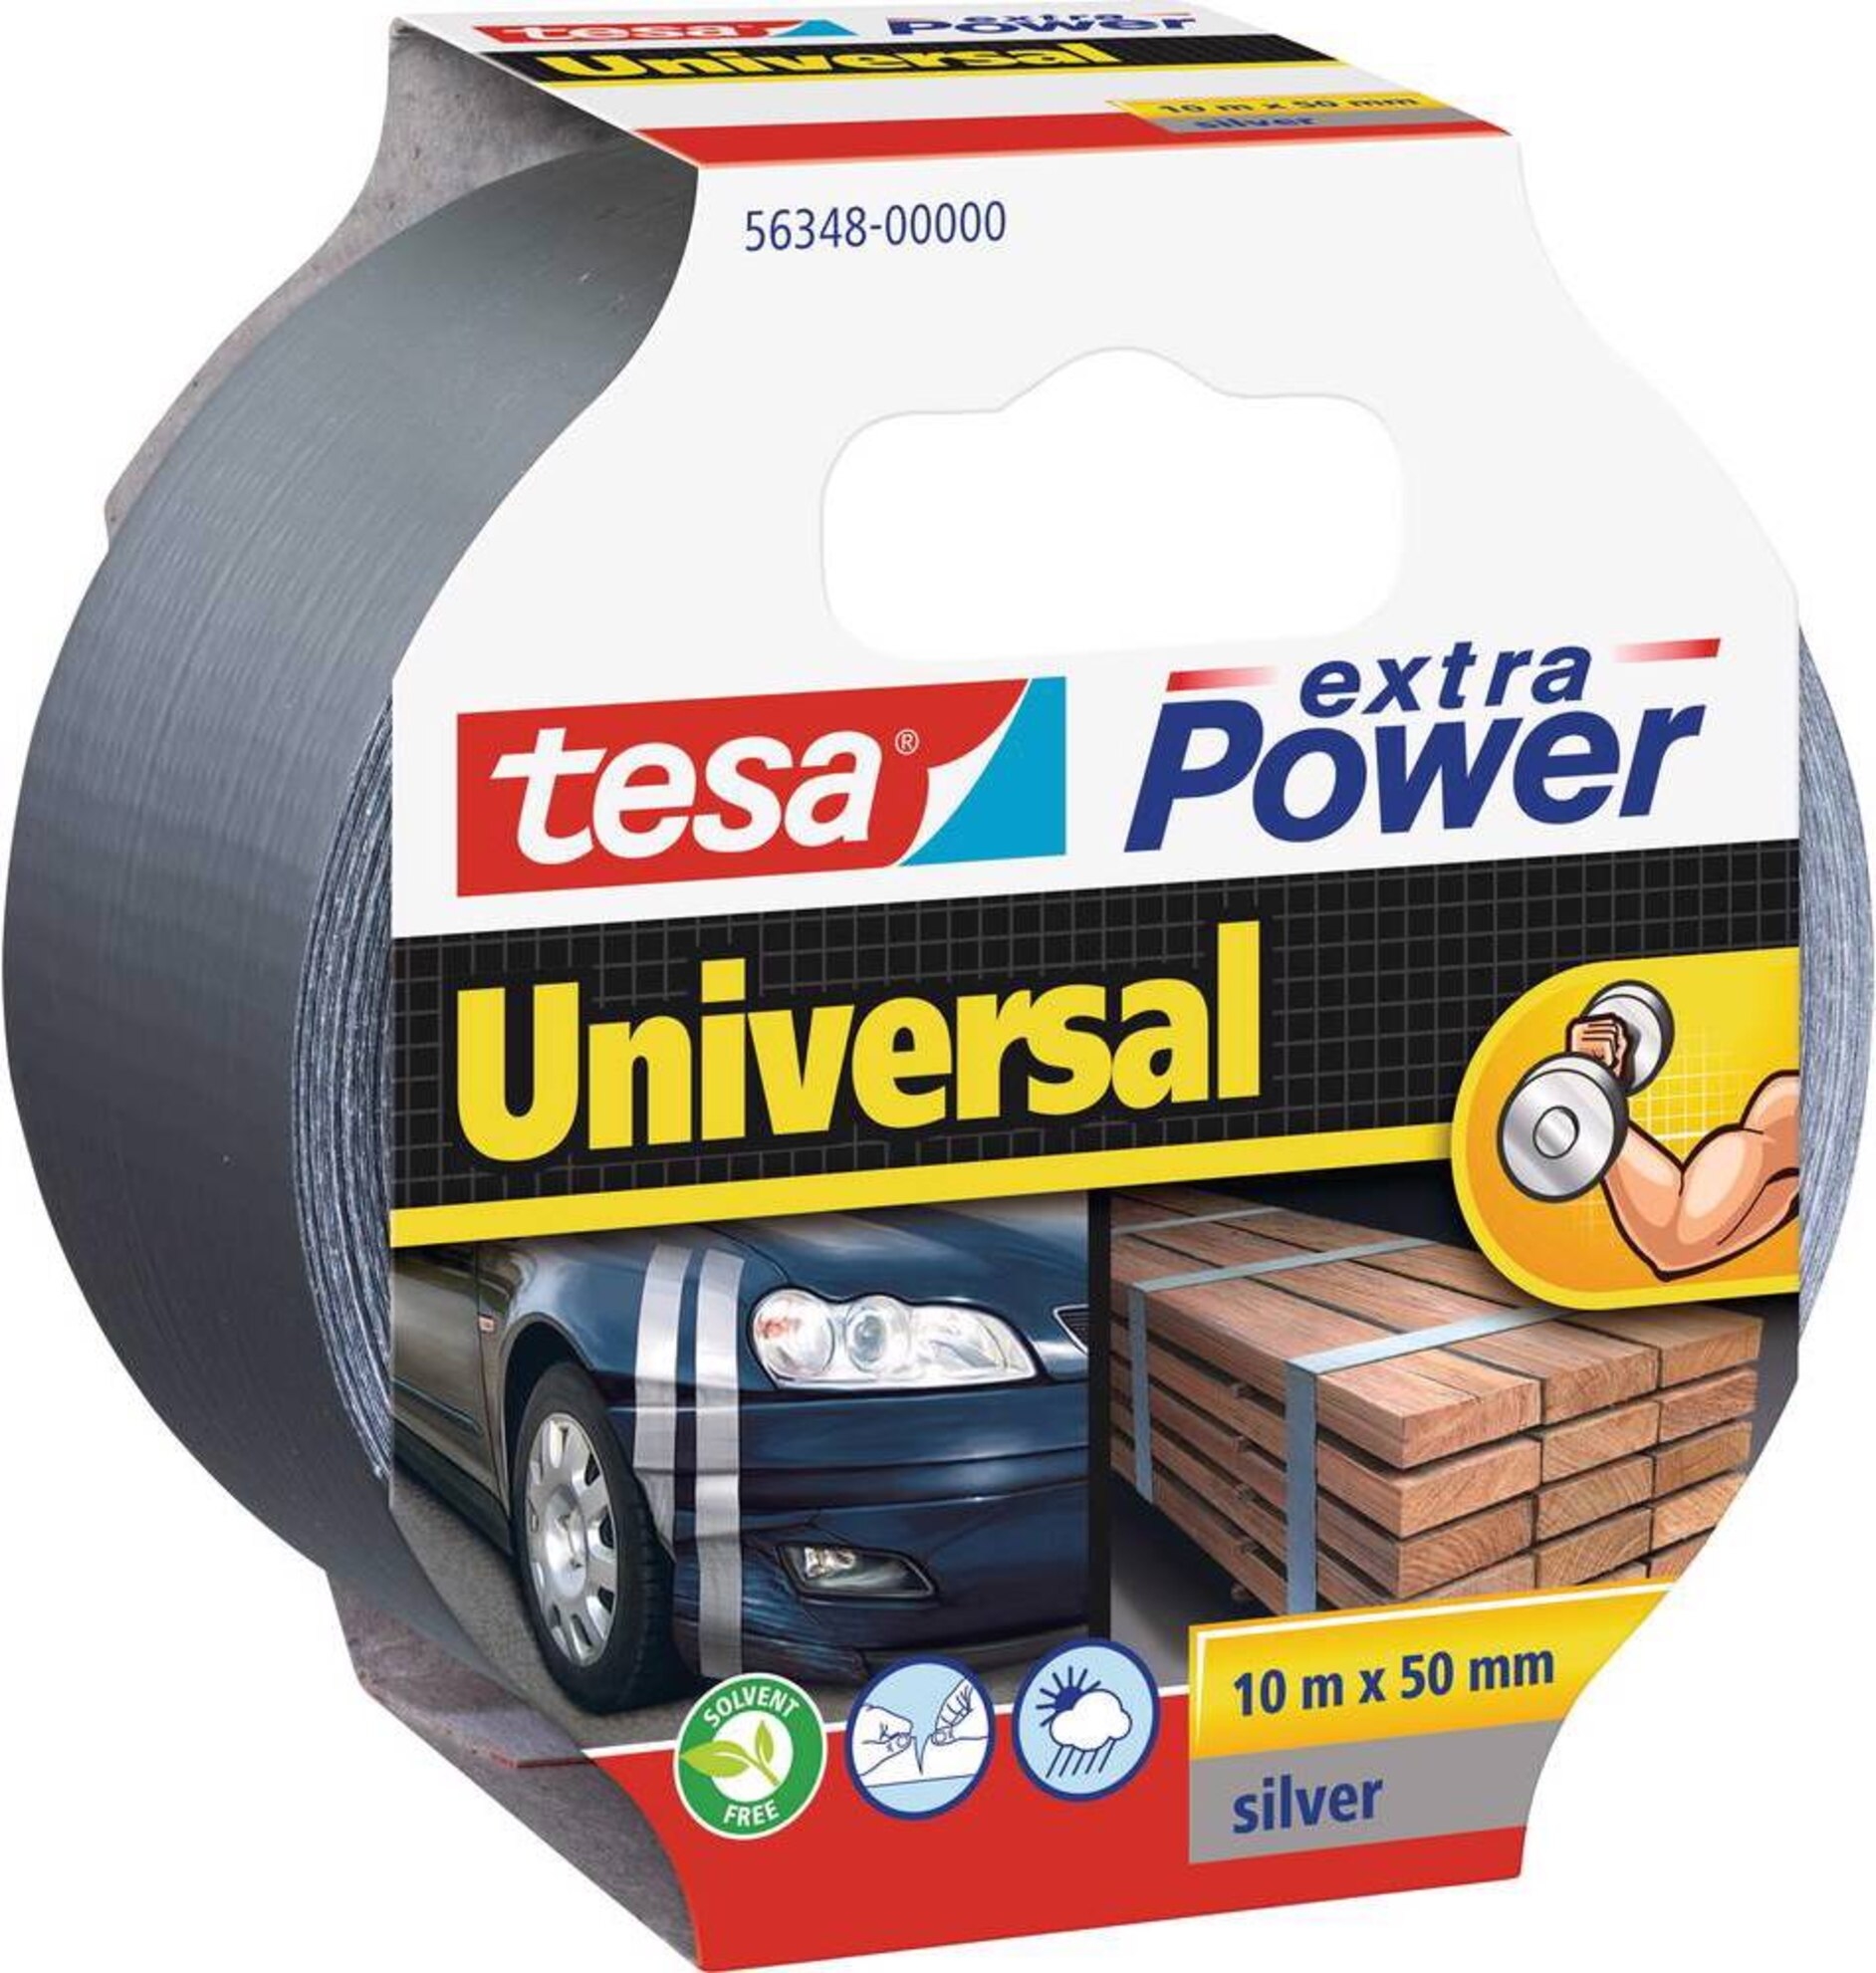 TESA Extra Power Universal 10mx50mm 563480000 Ruban texitl. argent Ruban texitl. argent